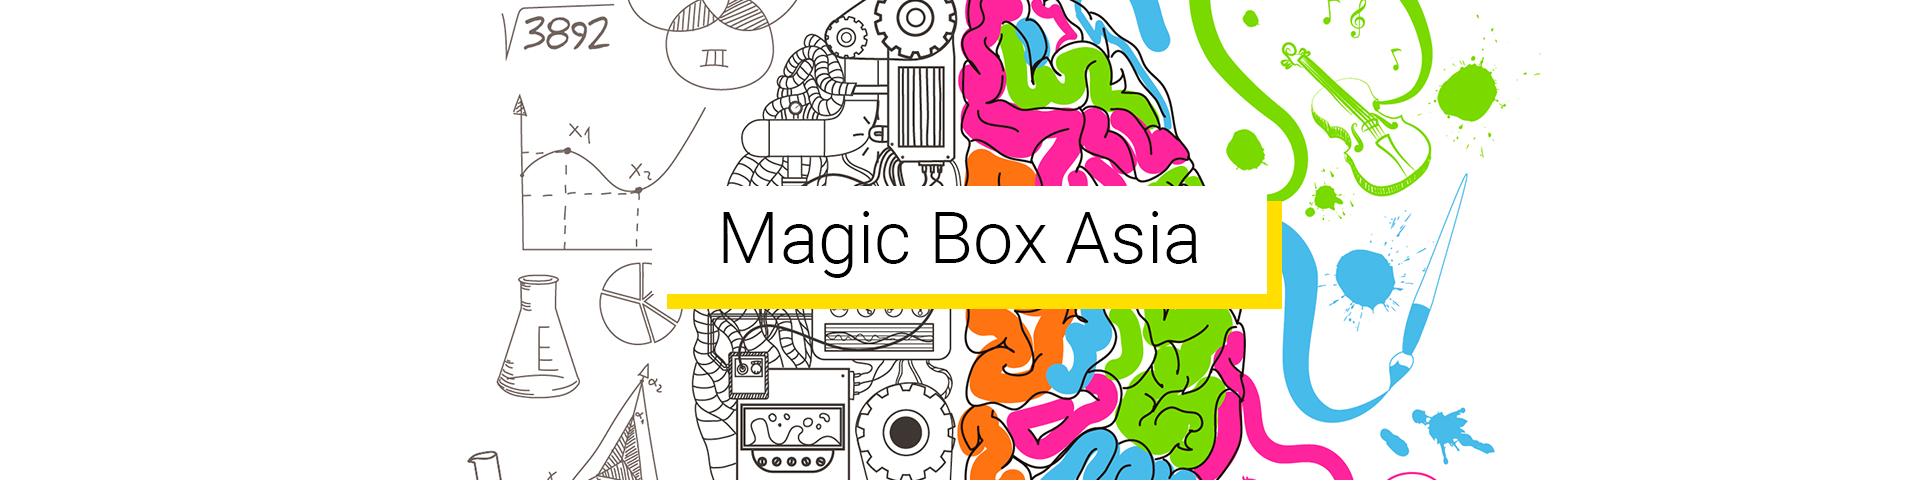 Magic Box Asia